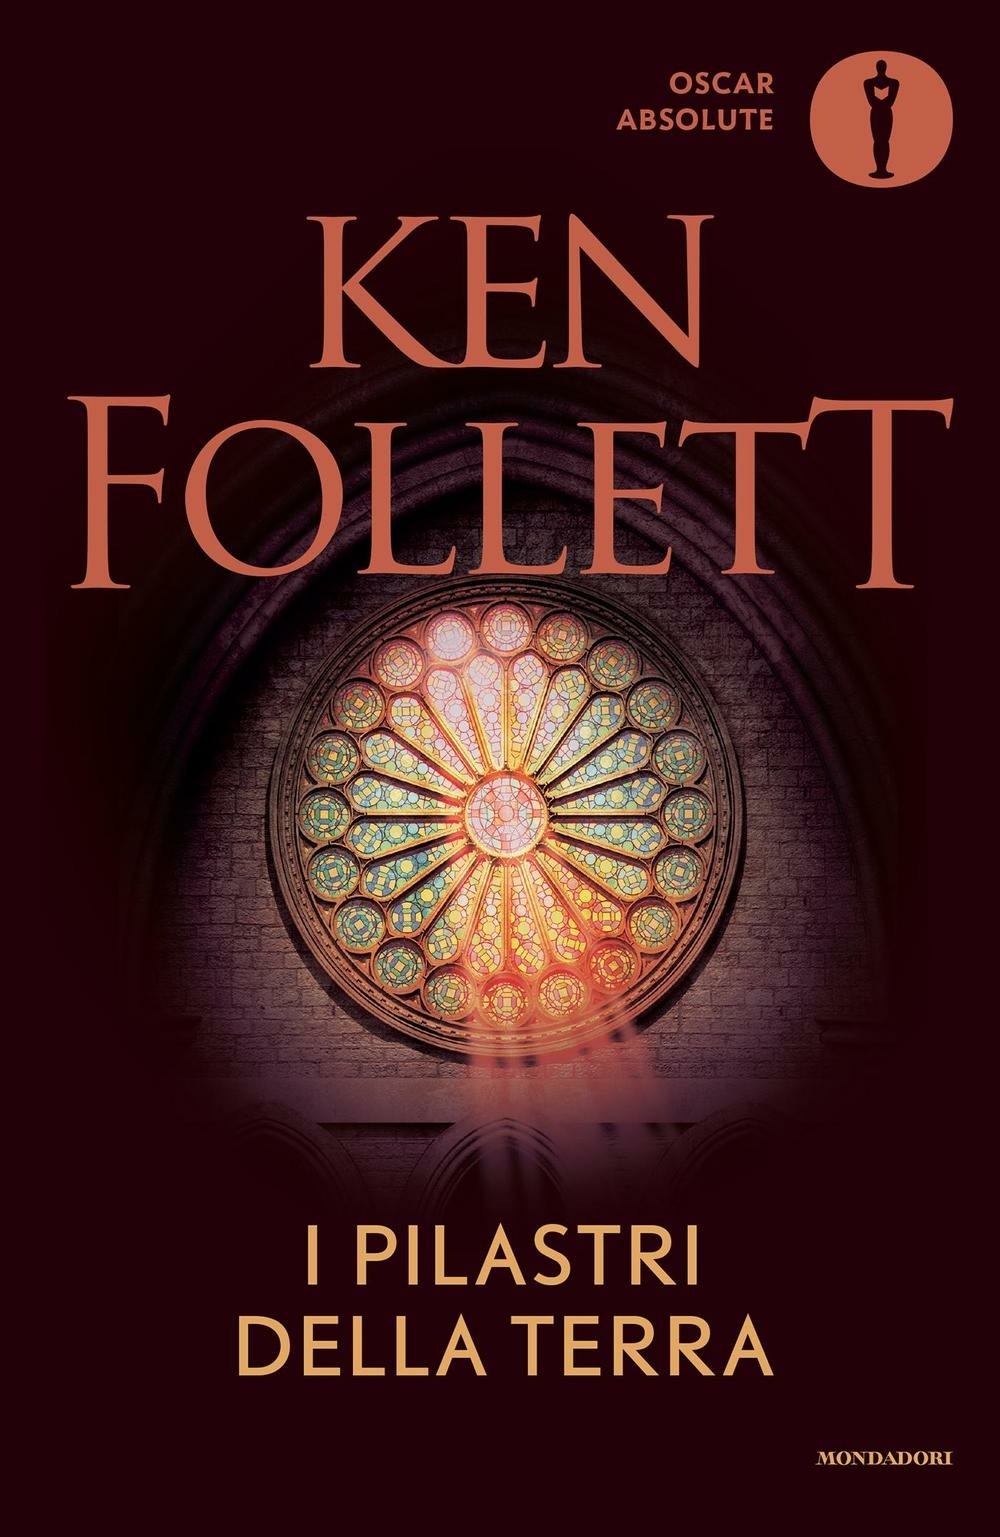 I pilastri della terra - Ken Follett - Mondadori